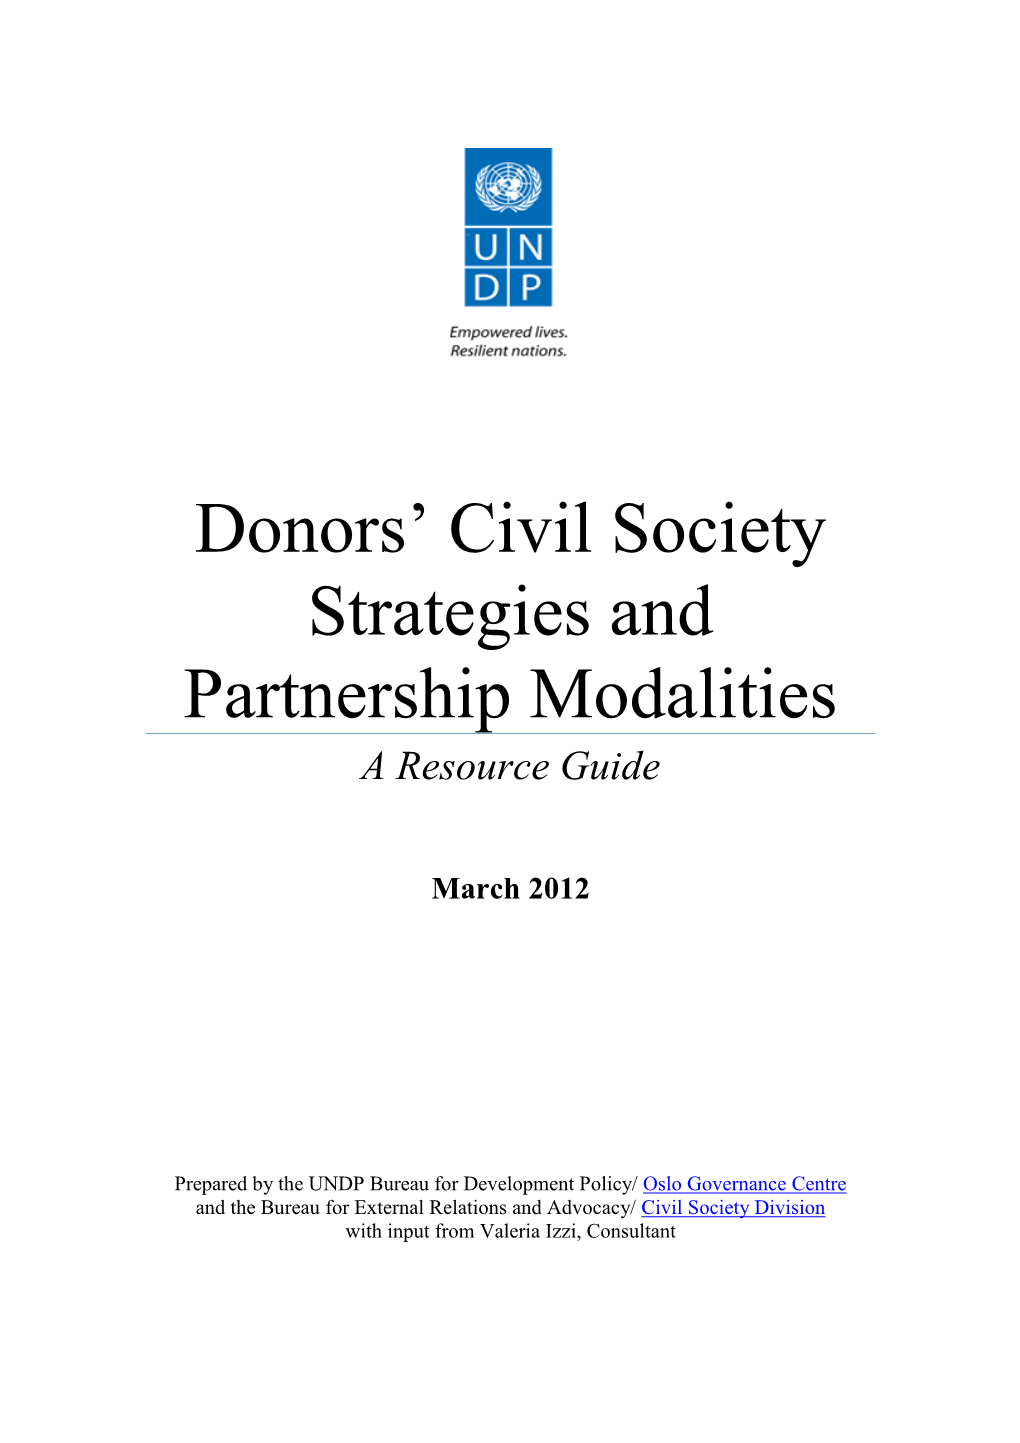 Donors' Civil Society Strategies and Partnership Modalities